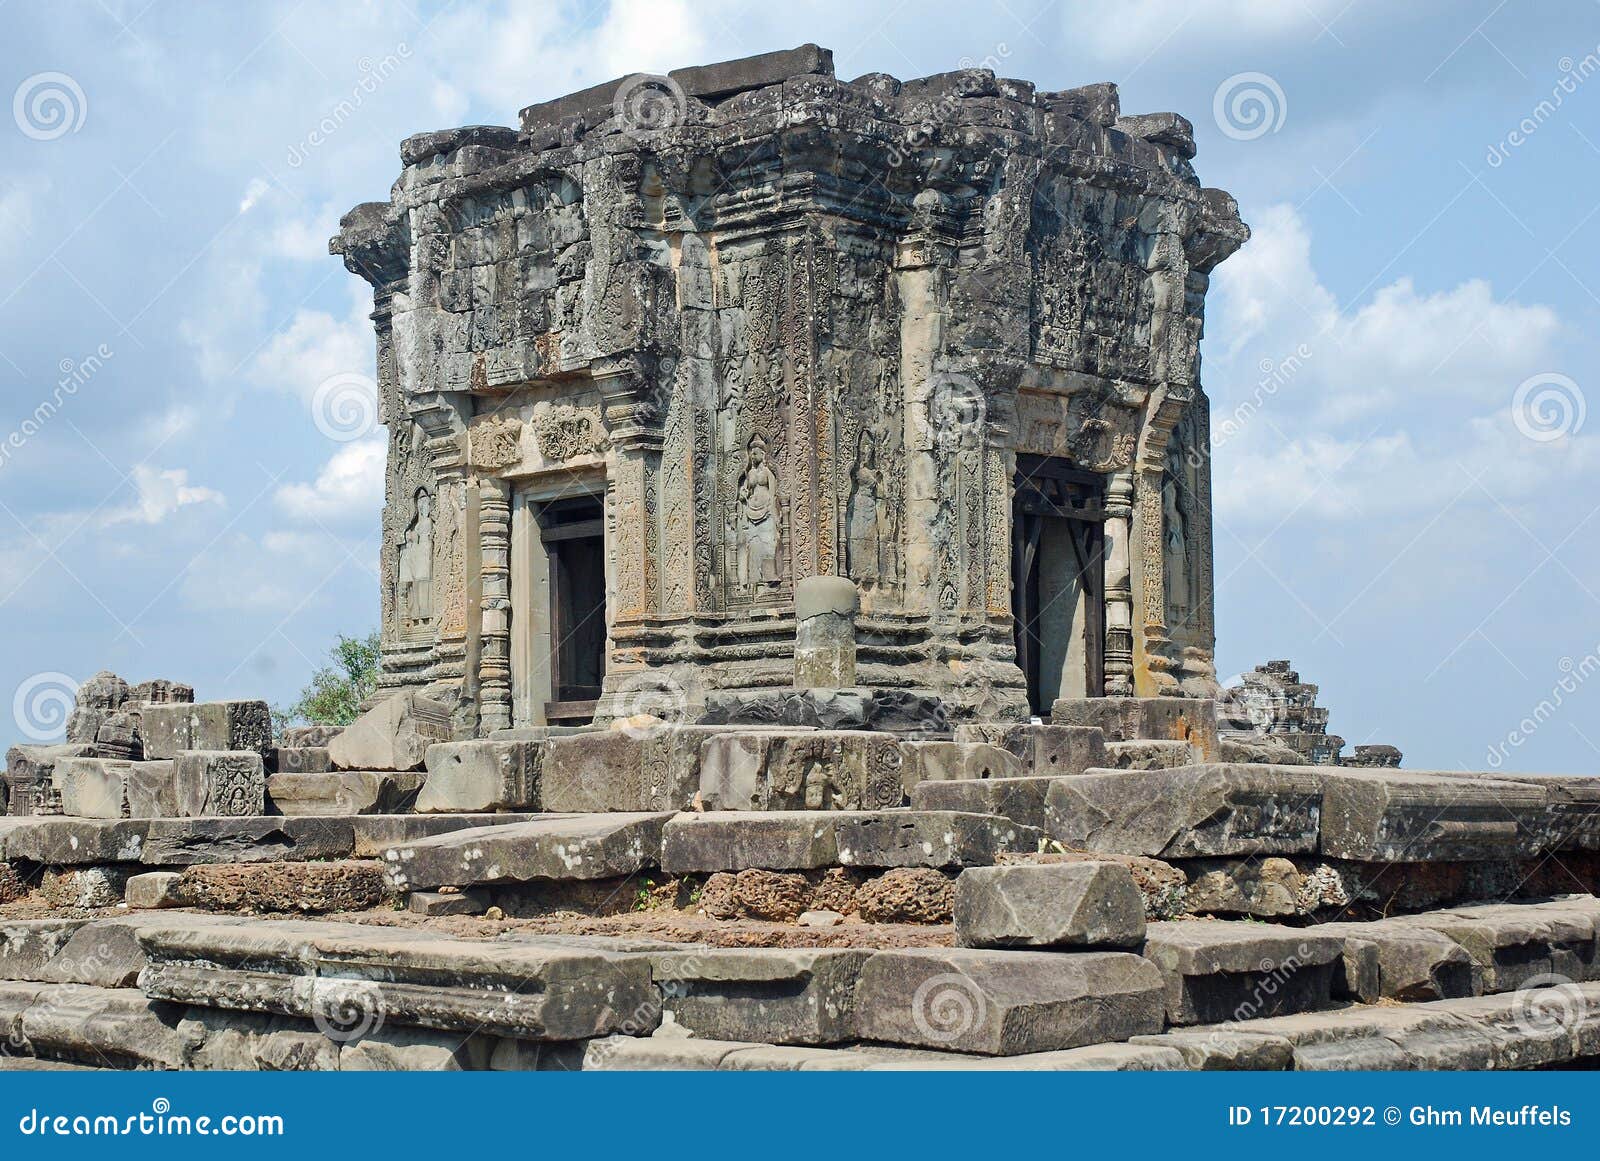 hindu temple phnom bakheng, angkor, cambodia